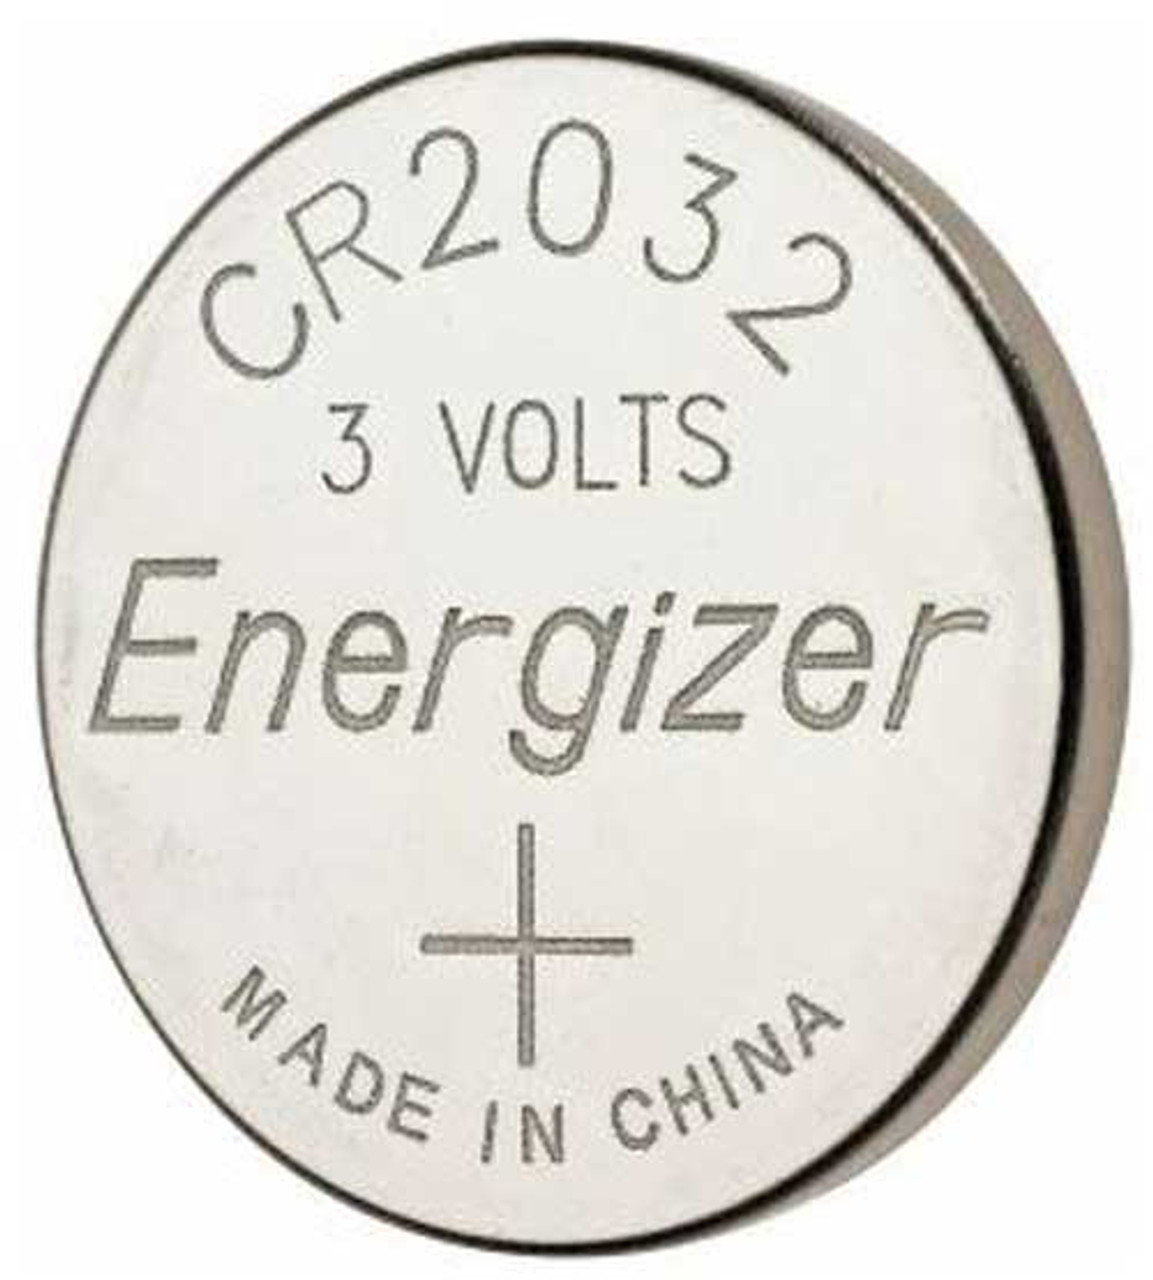 2 pc ENERGIZER CR2032 ECR2032 3v Battery EXPIRE 2030 MADE IN JAPAN